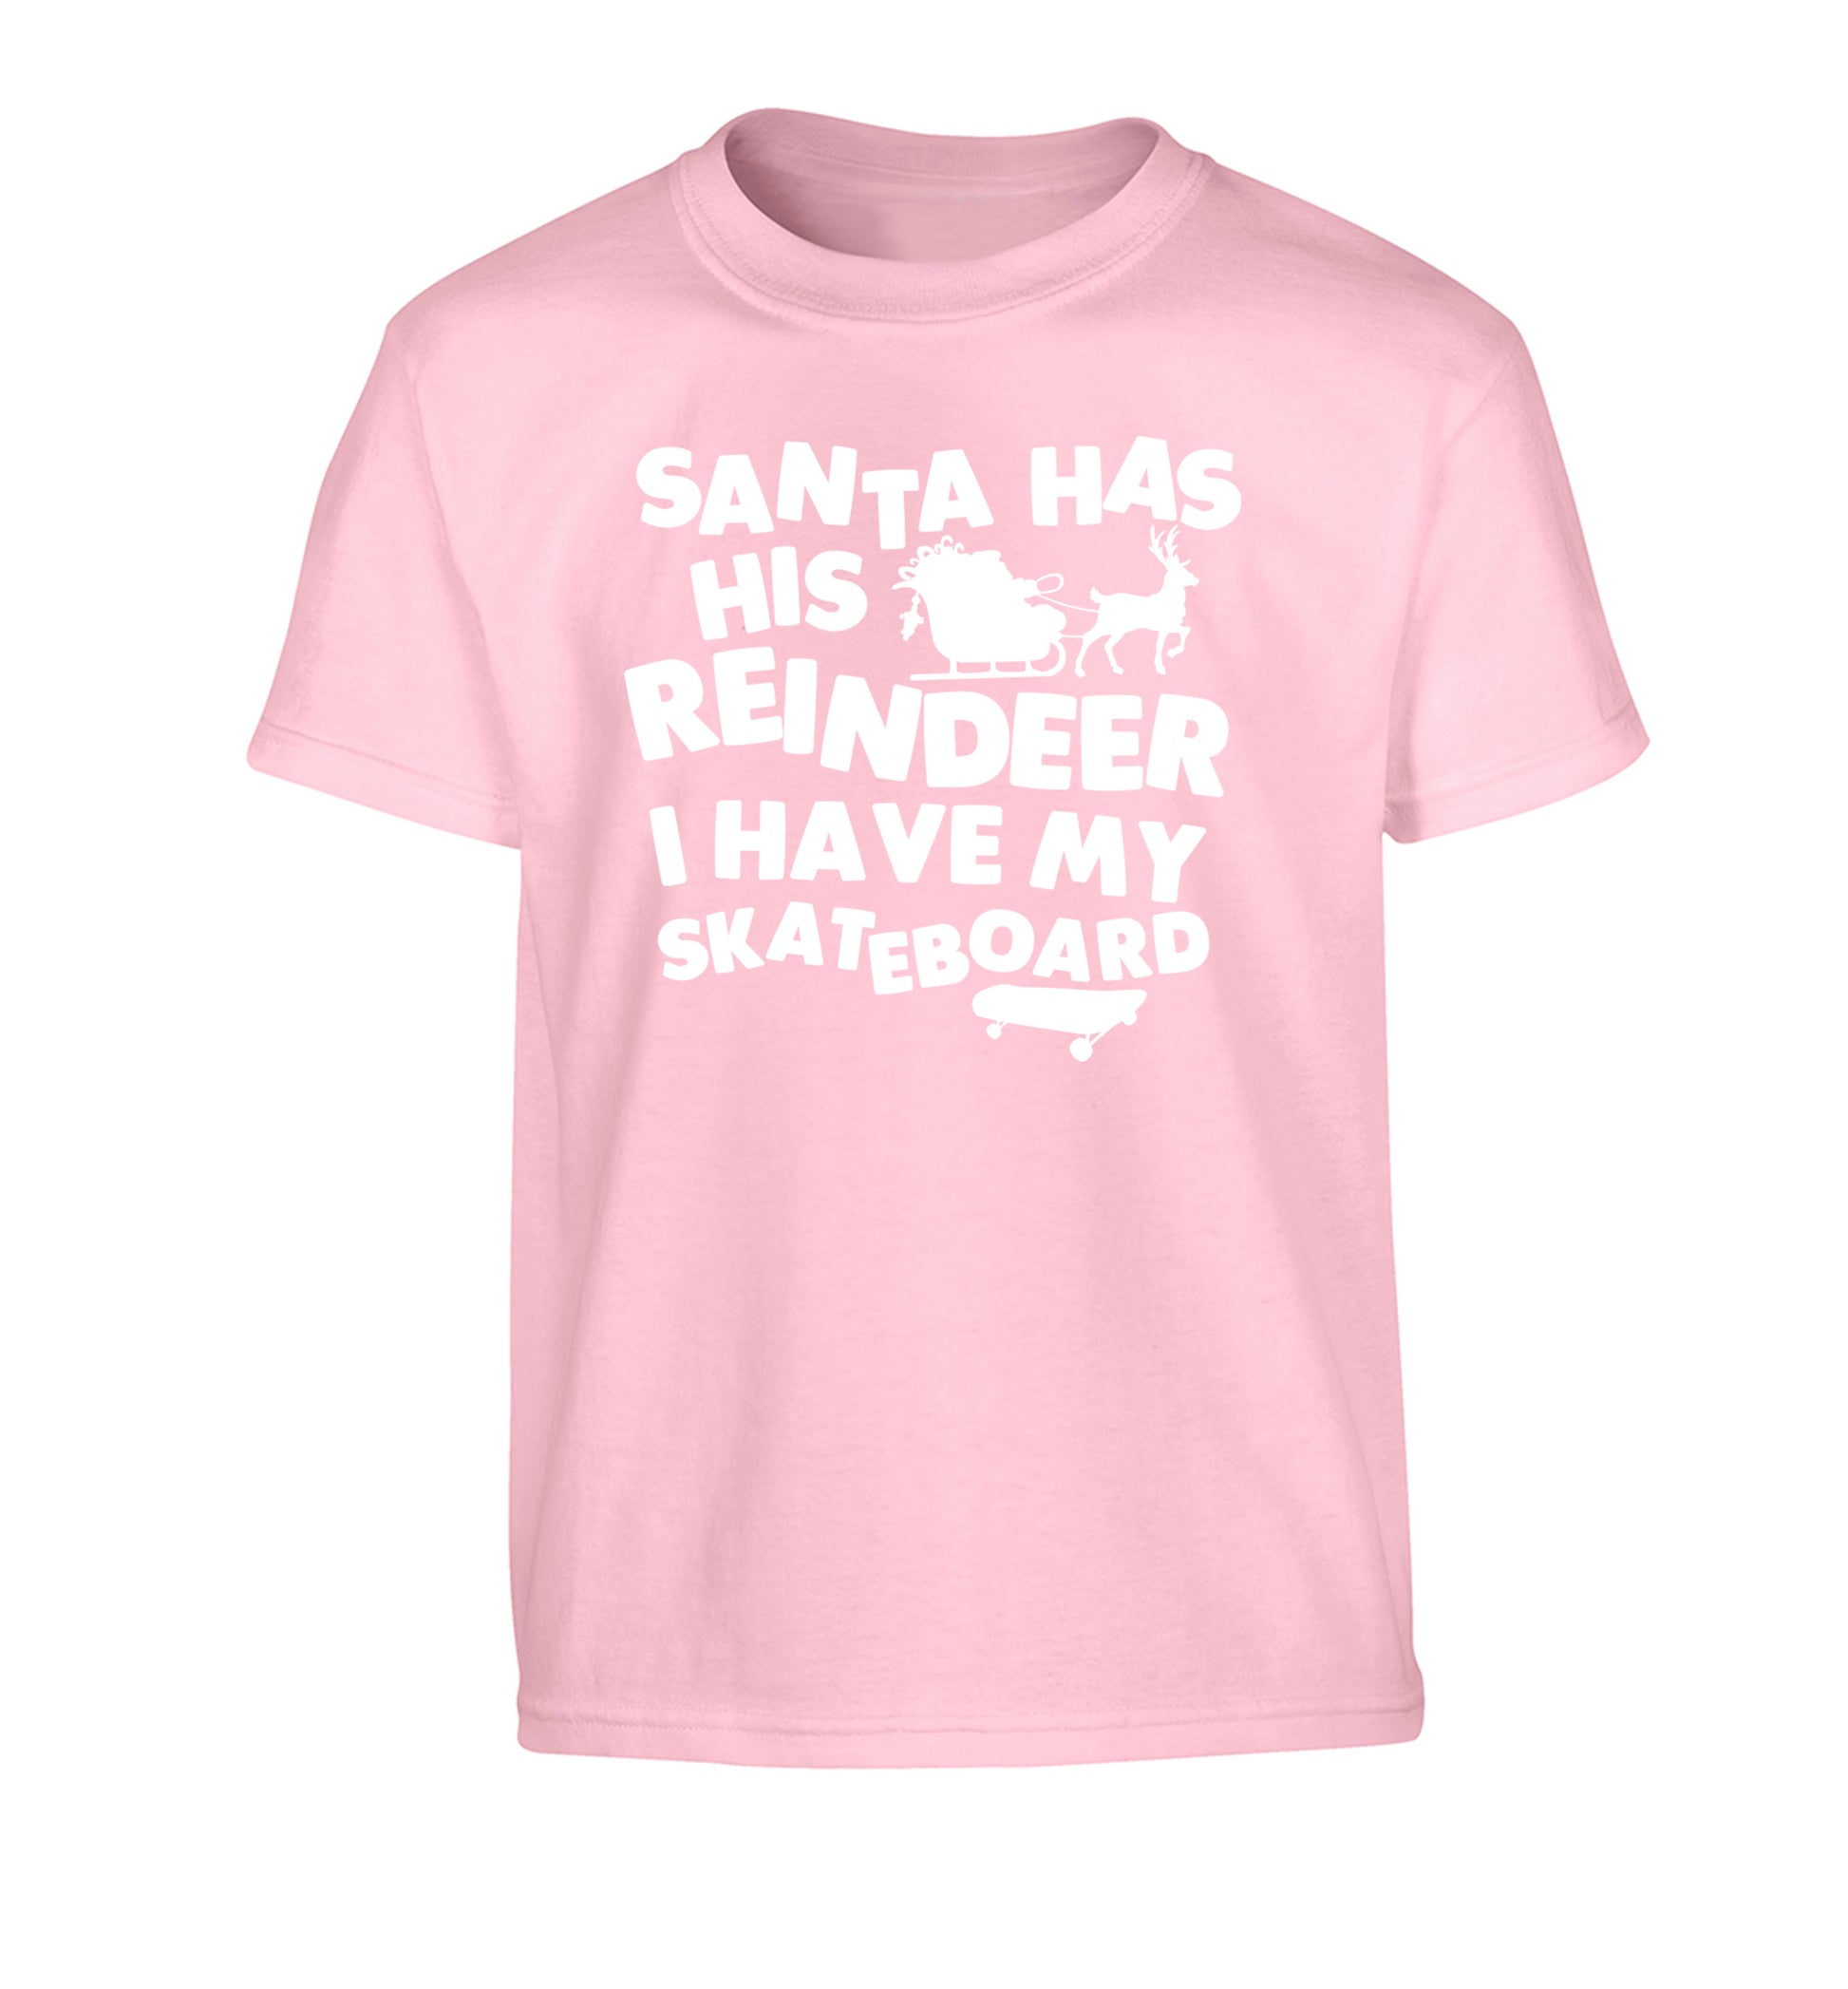 Santa has his reindeer I have my skateboard Children's light pink Tshirt 12-14 Years